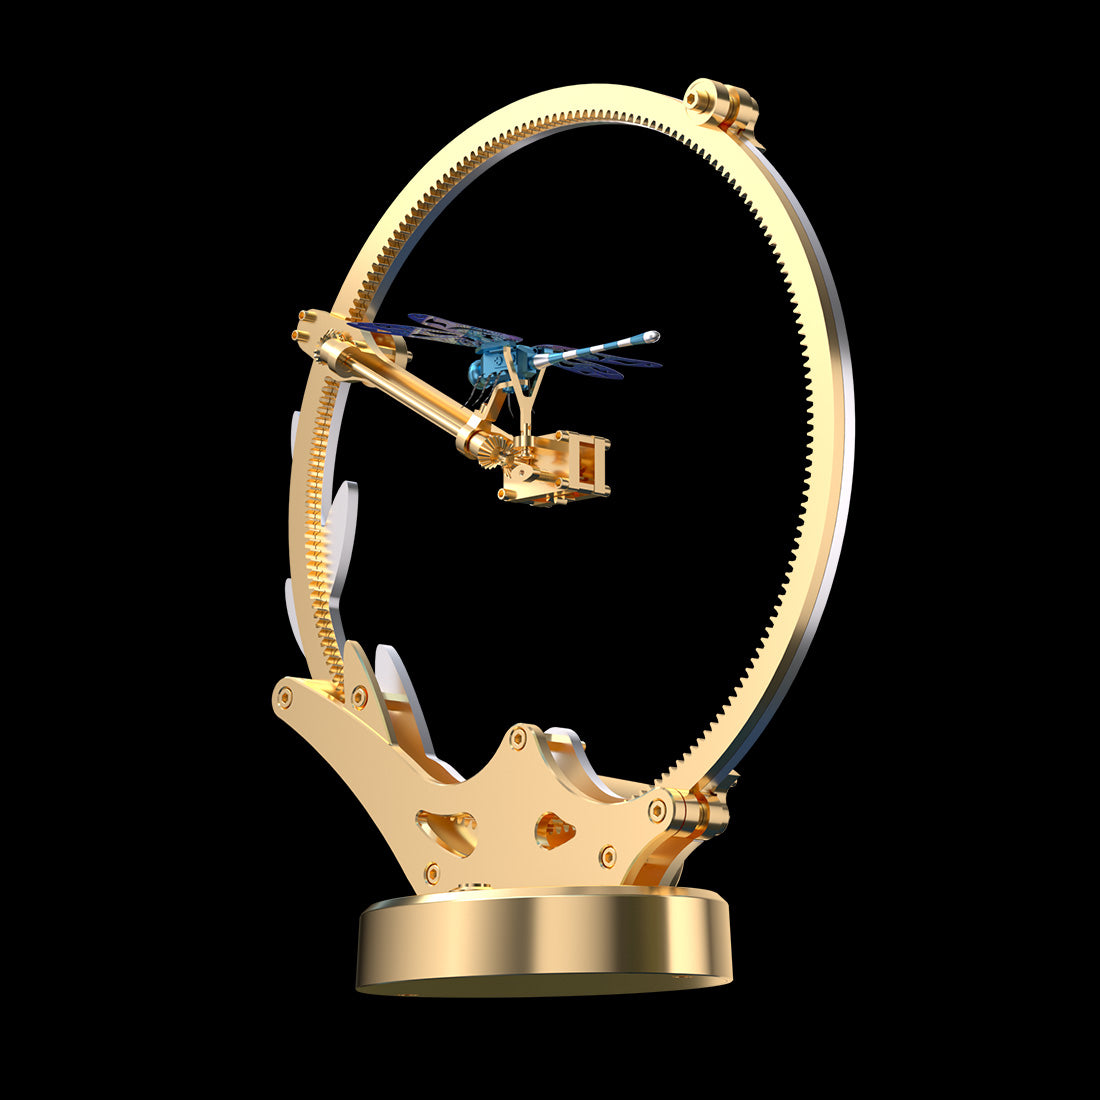 Golden Dragonfly Kinetic Art 3D Metal Model Kits 100pcs